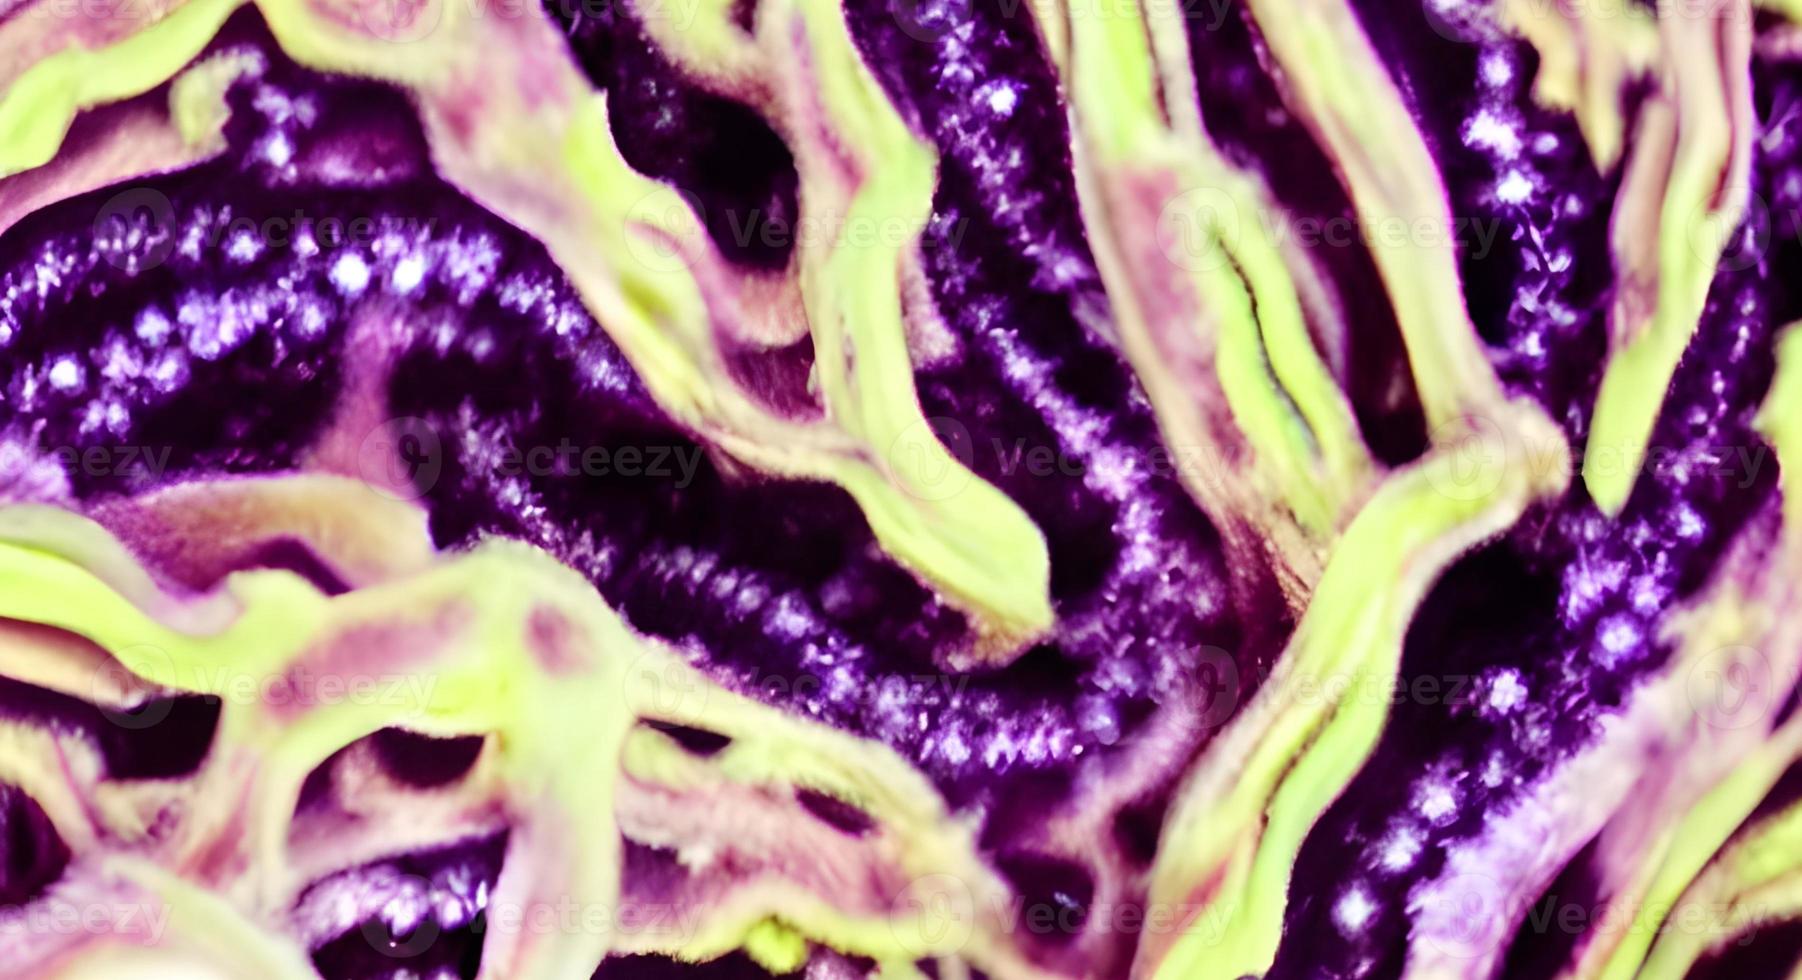 närbild av virus celler eller bakterie på ljus bakgrund foto